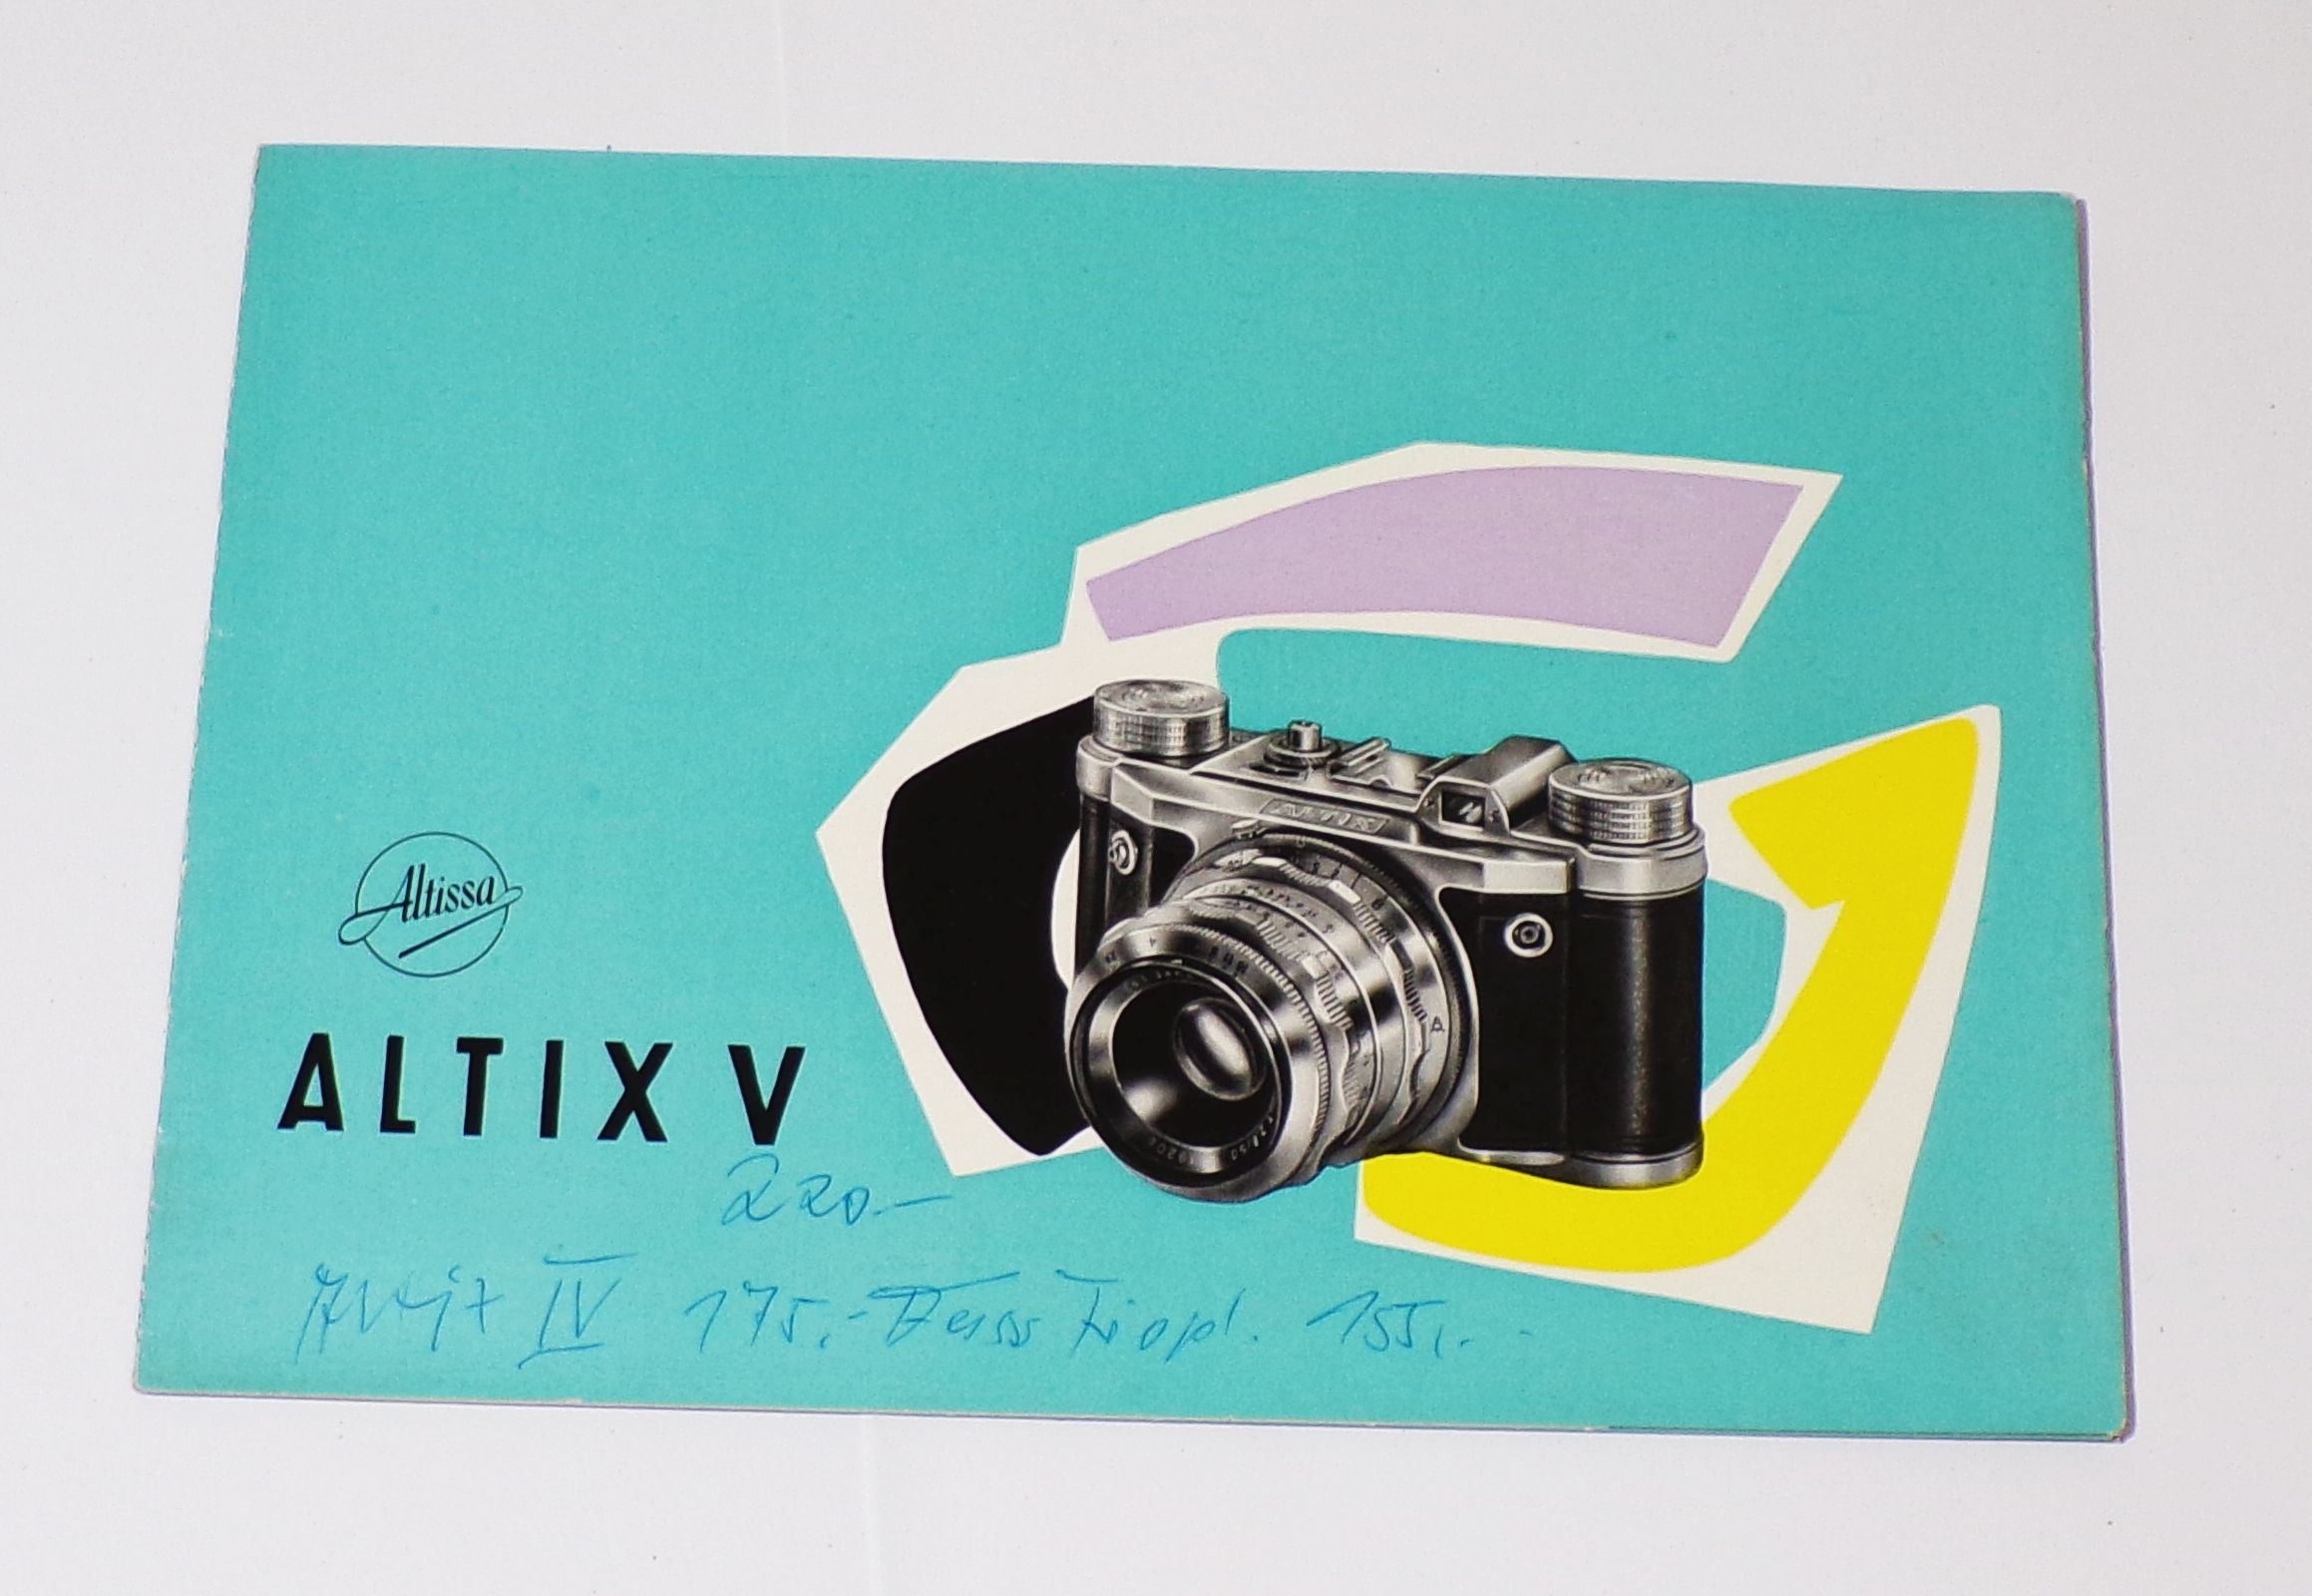 Altix V Altissa Fotoapparat Kamera 1956